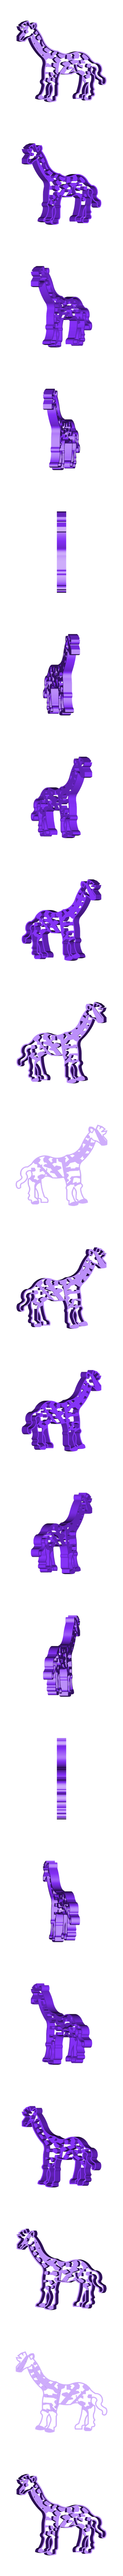 JIRAFA,GIRAFFE.stl Download STL file giraffe cookie cutter, giraffe cookie cutter, giraffe cookie cutter • 3D print object, catoiraf